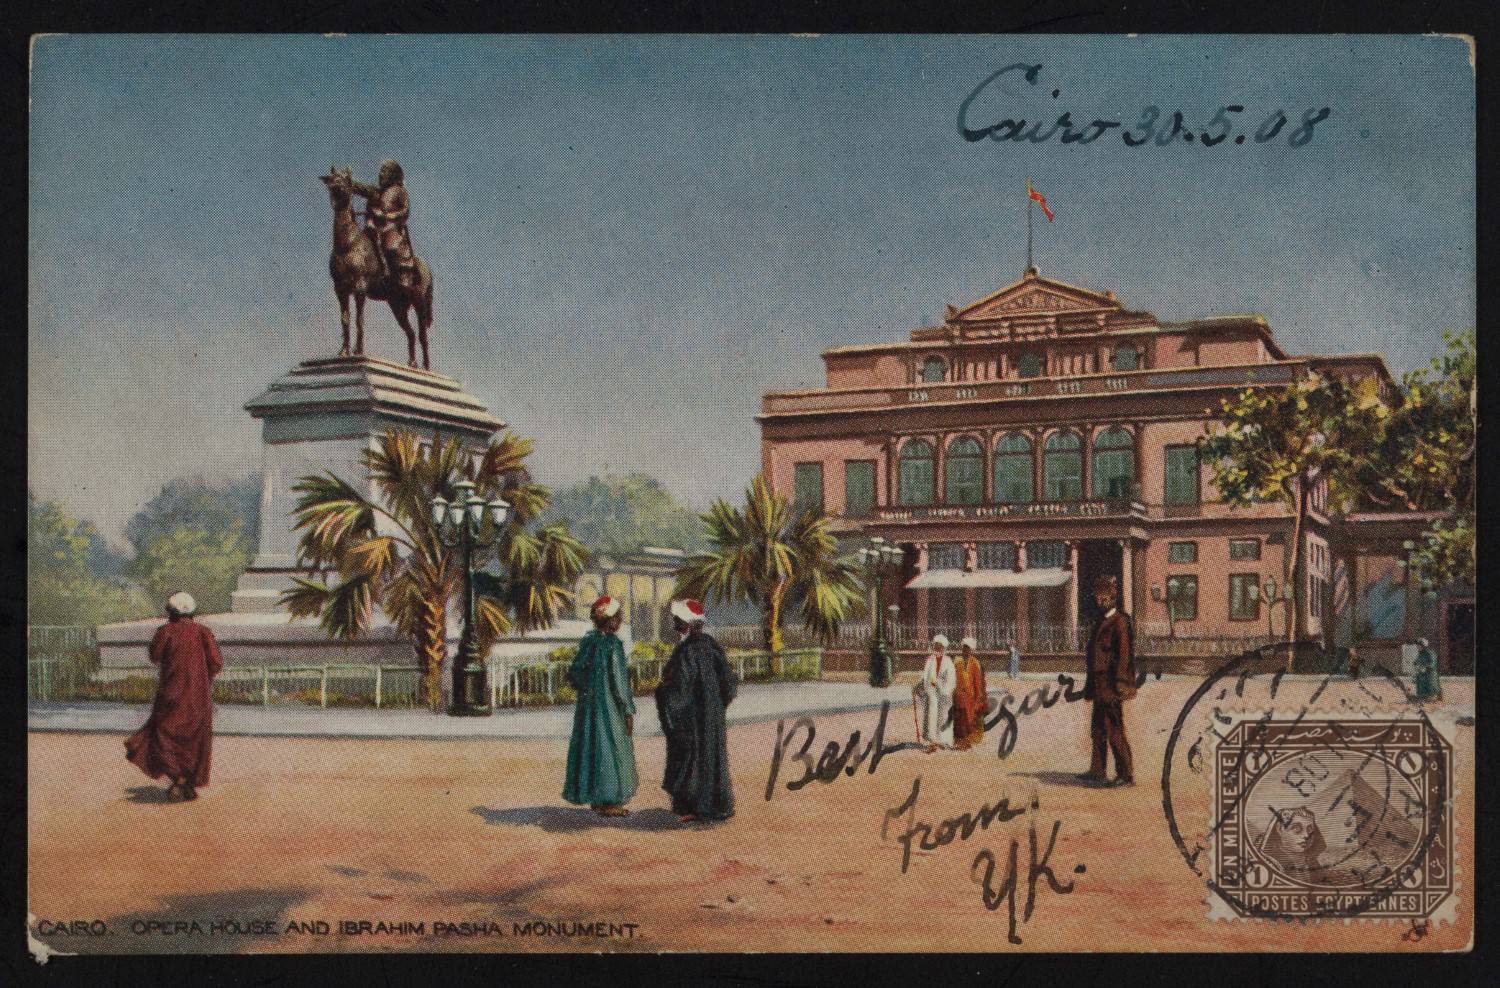 Old Cairo Opera House - Postcard of Cairo opera house and Ibrahim Pasha monument